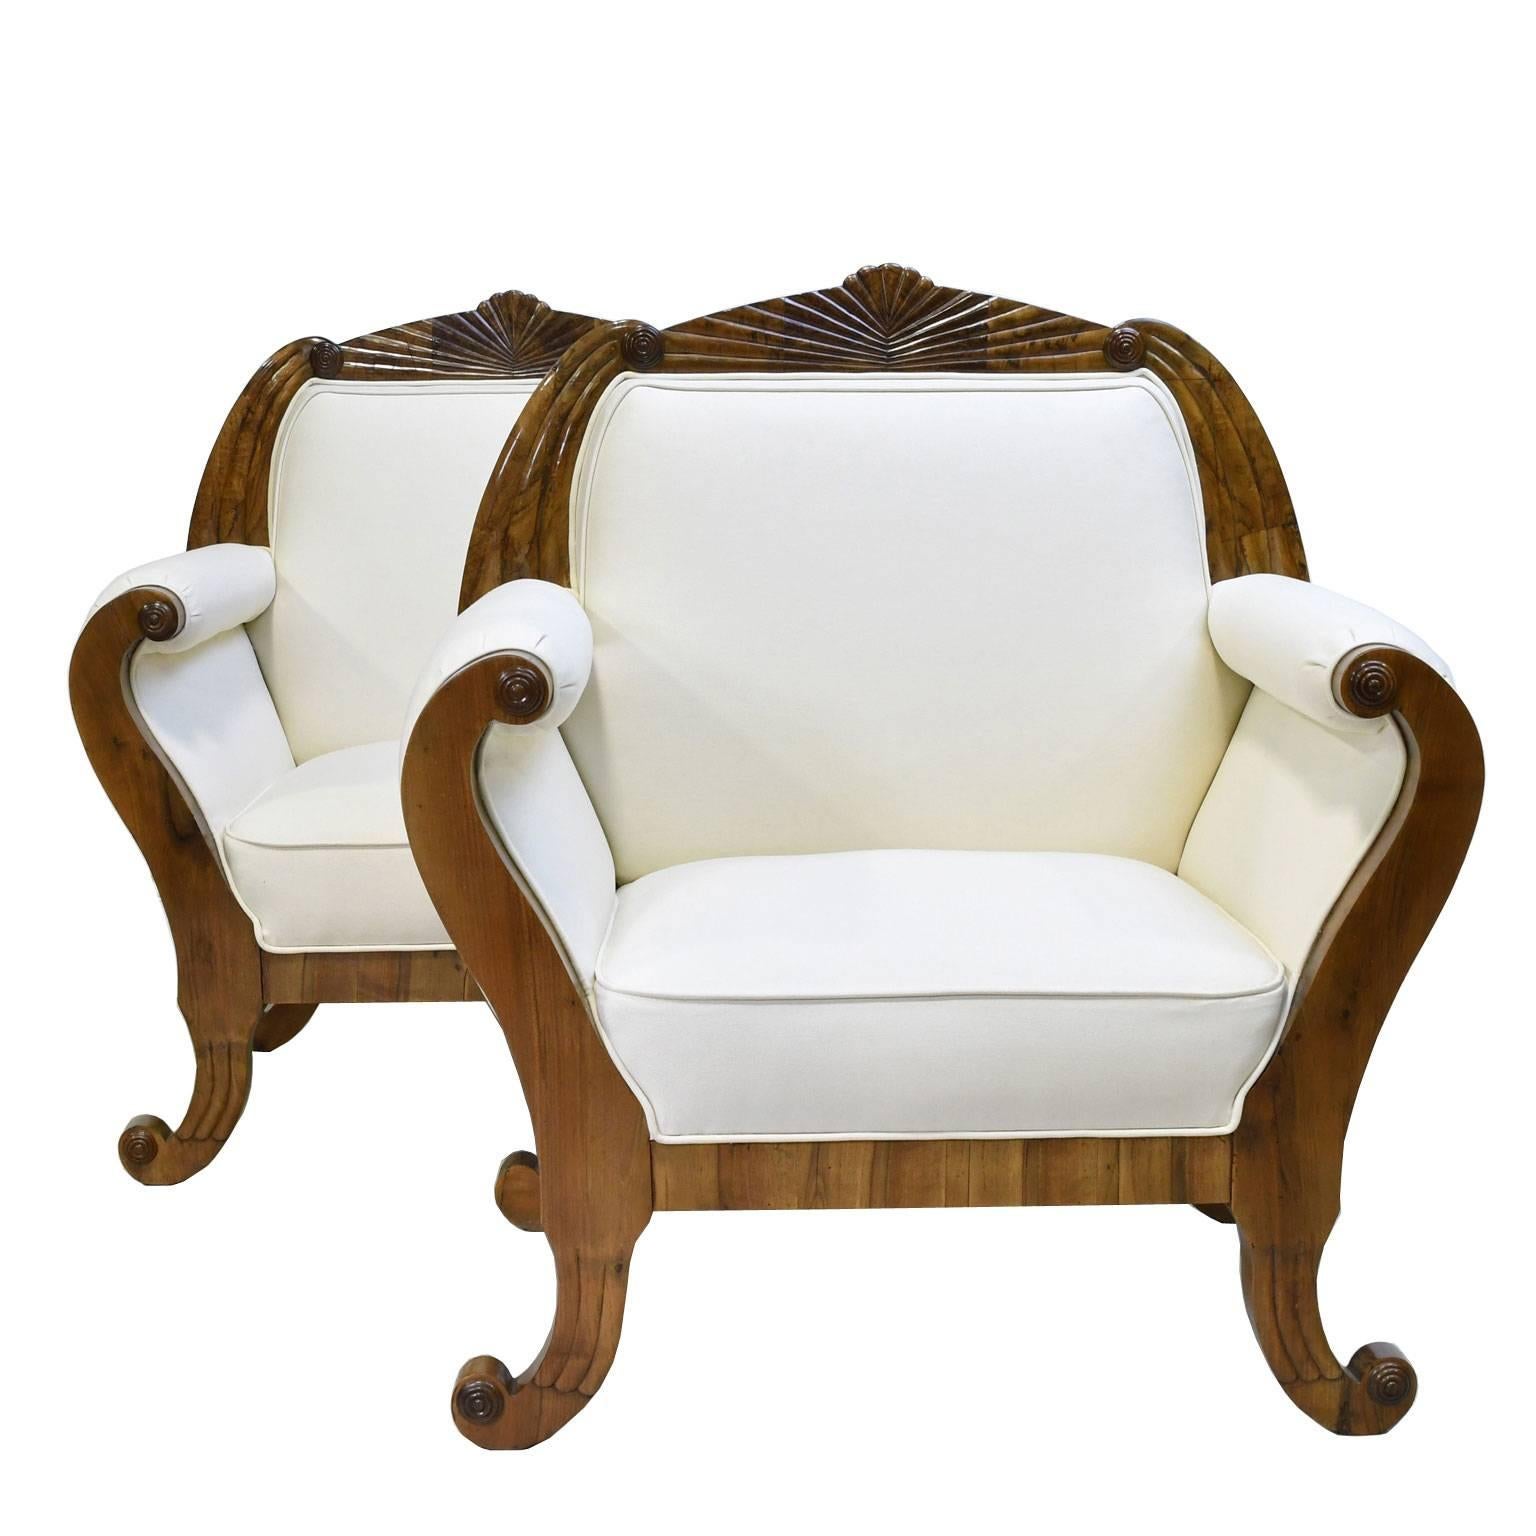 South German Biedermeier Sofa in Walnut with Fan-Carved Crest, circa 1830 For Sale 1